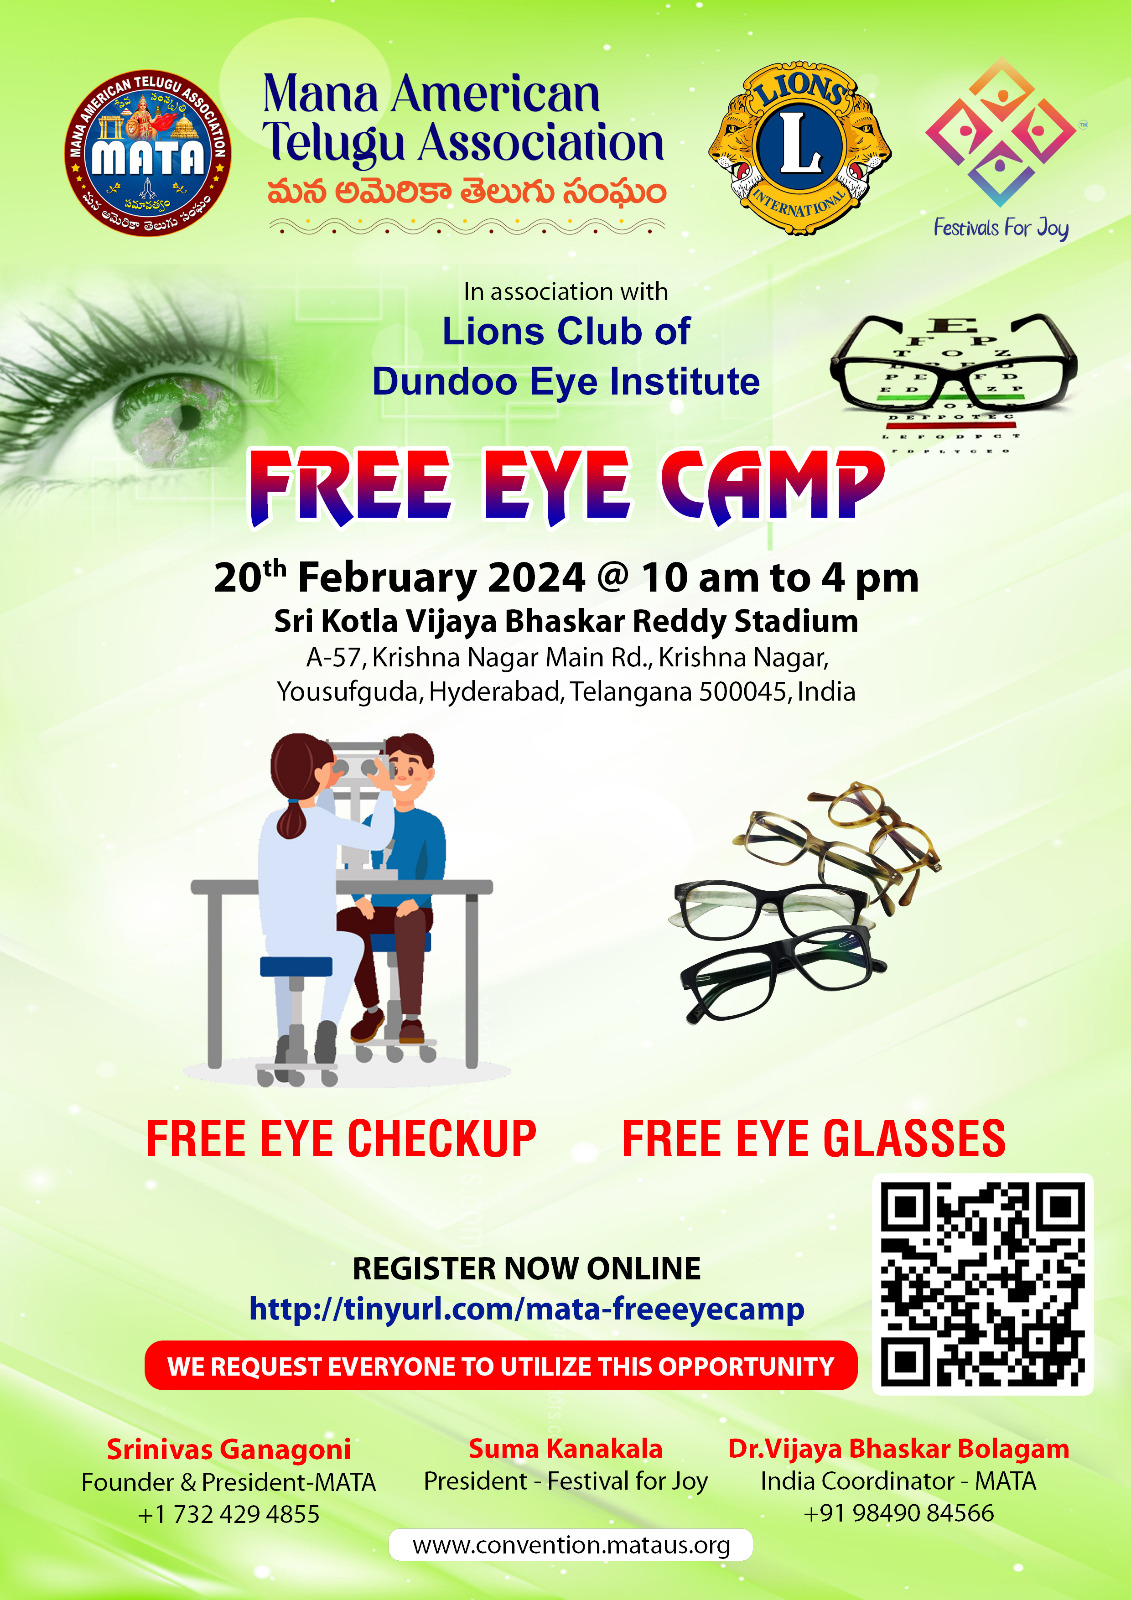 MATA-Free Eye Checkup Camp in Hyderabad